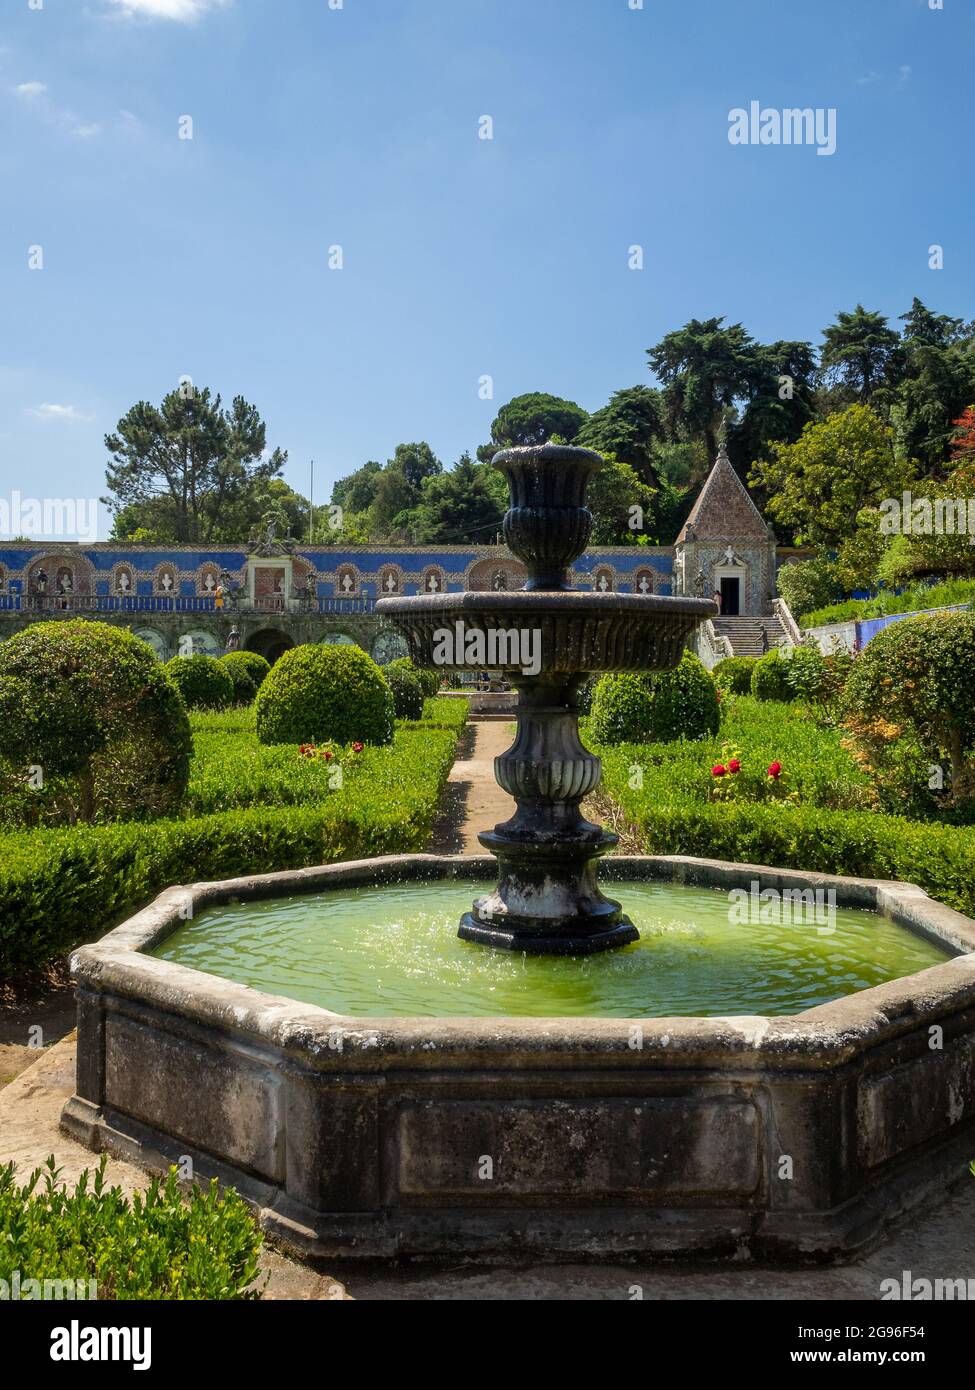 Fronteira Palace garden Stock Photo